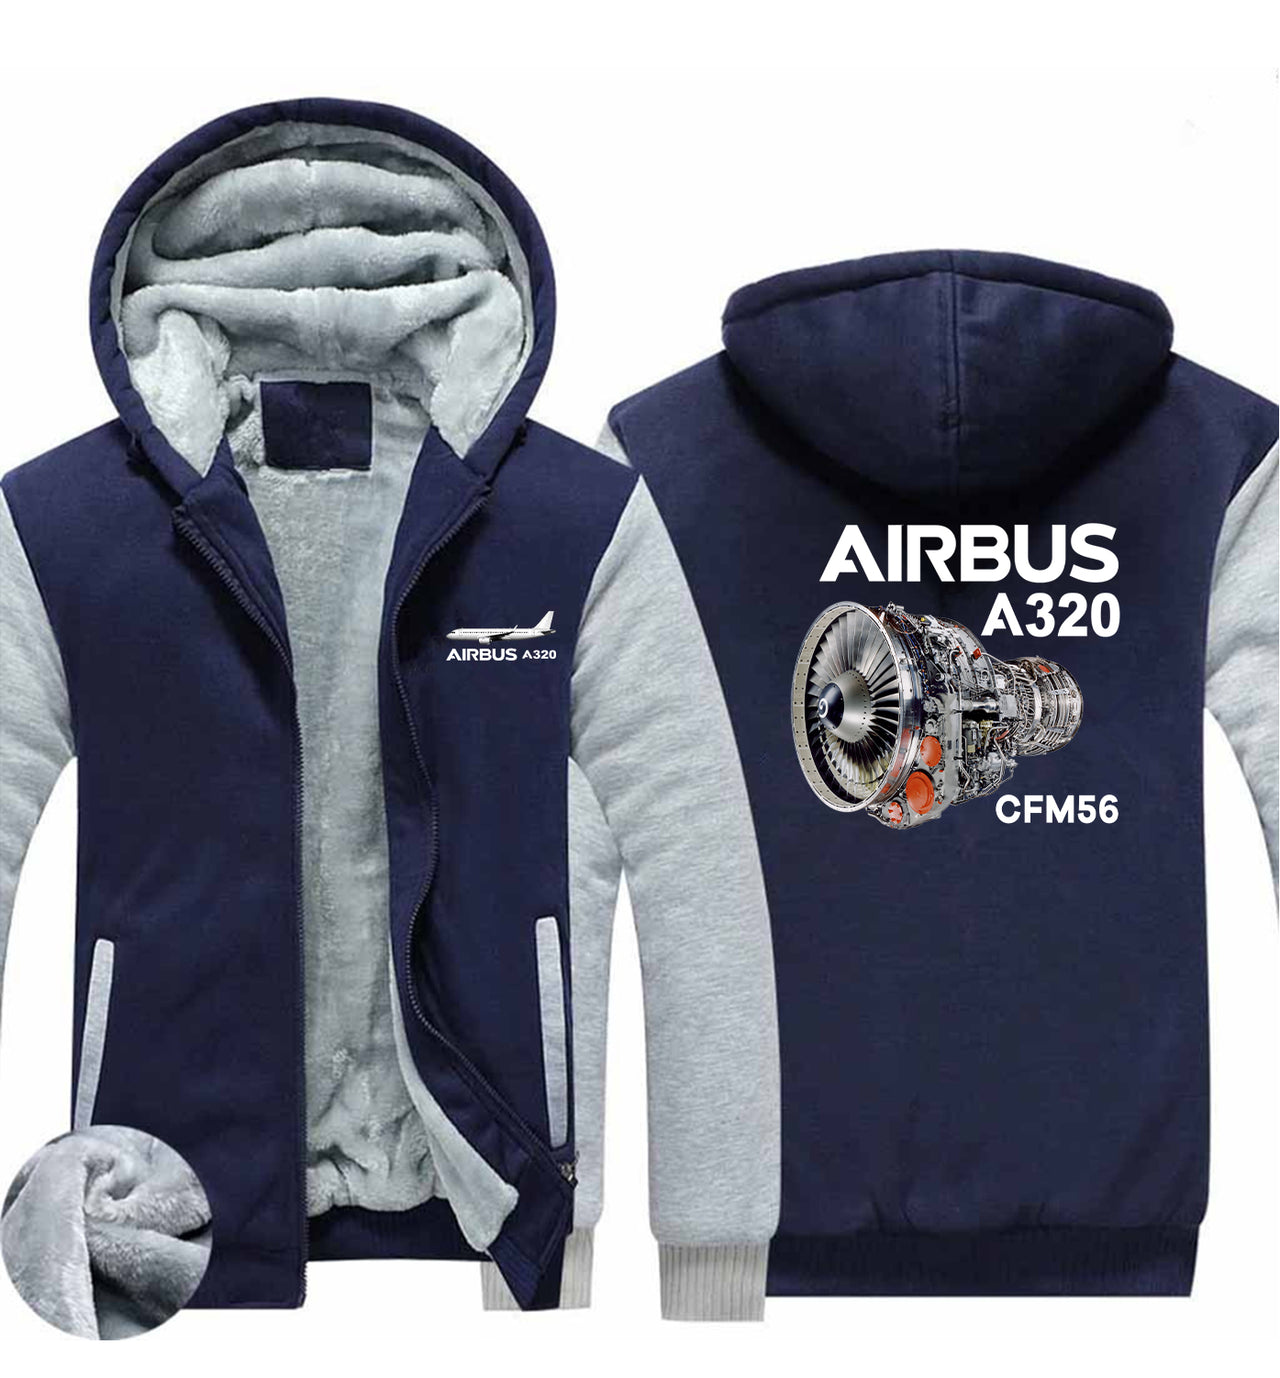 Airbus A320 & CFM56 Engine Designed Zipped Sweatshirts